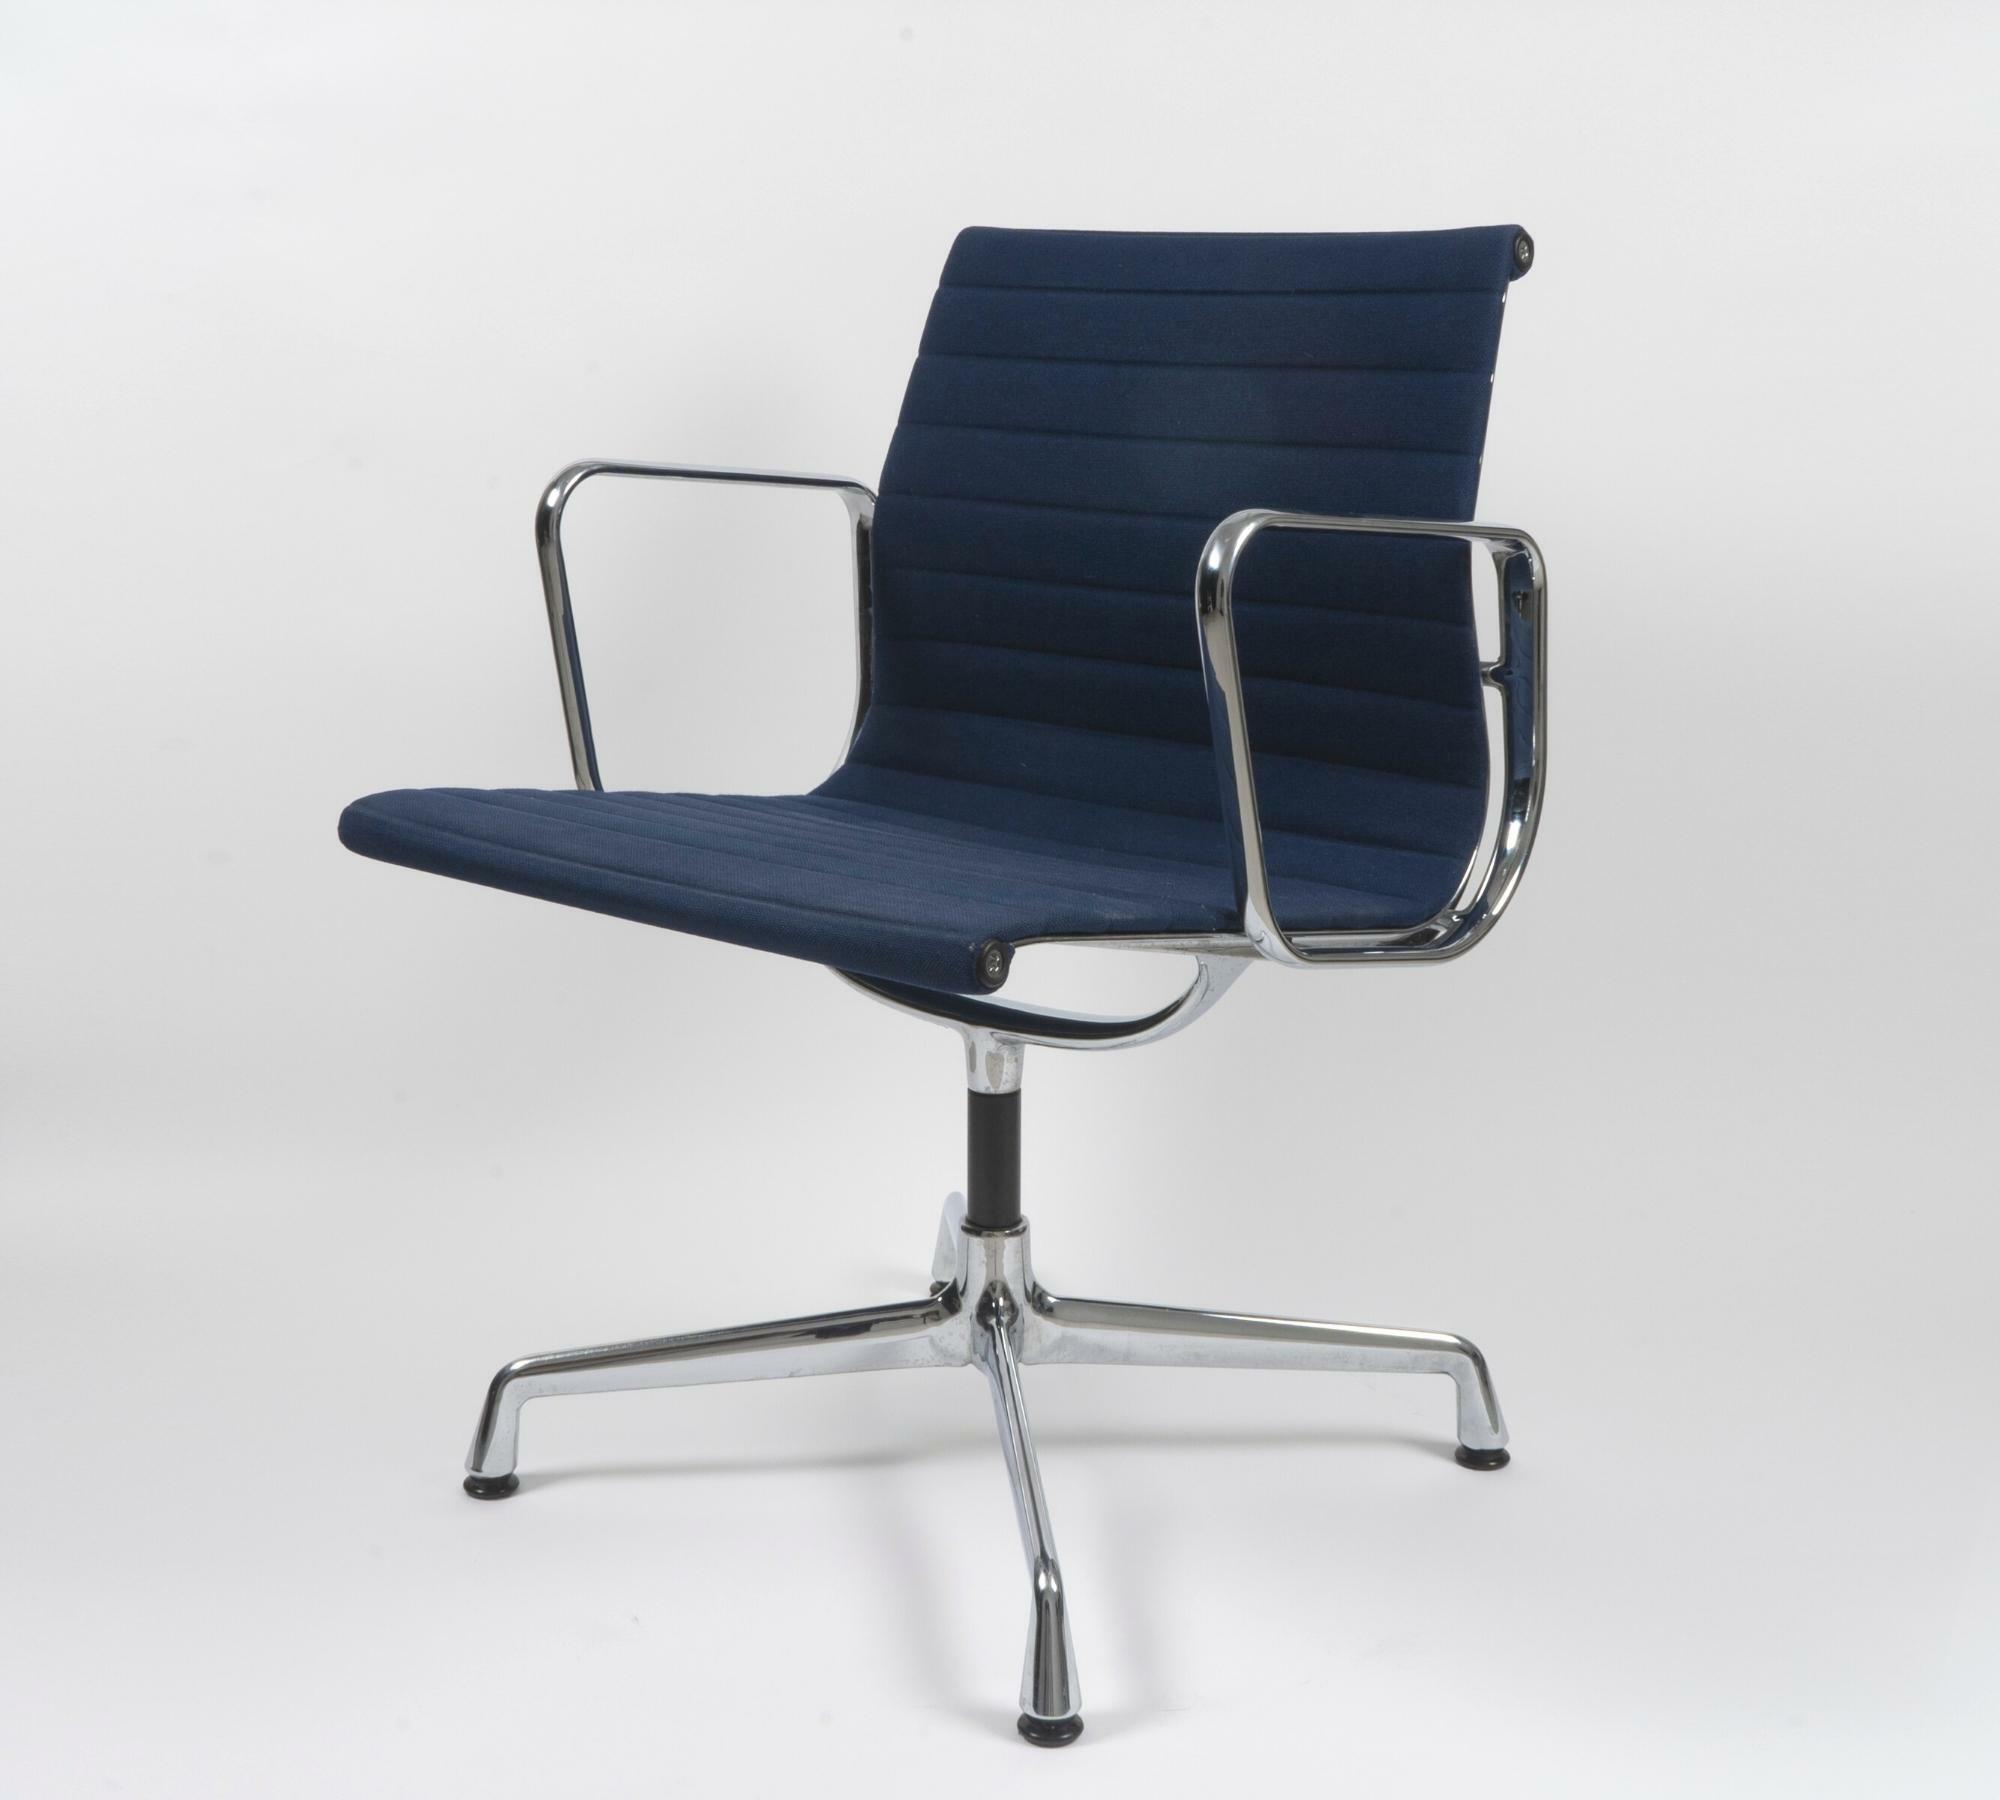 Vitra EA 107 Aluminum Chair Hopsak Blau 0